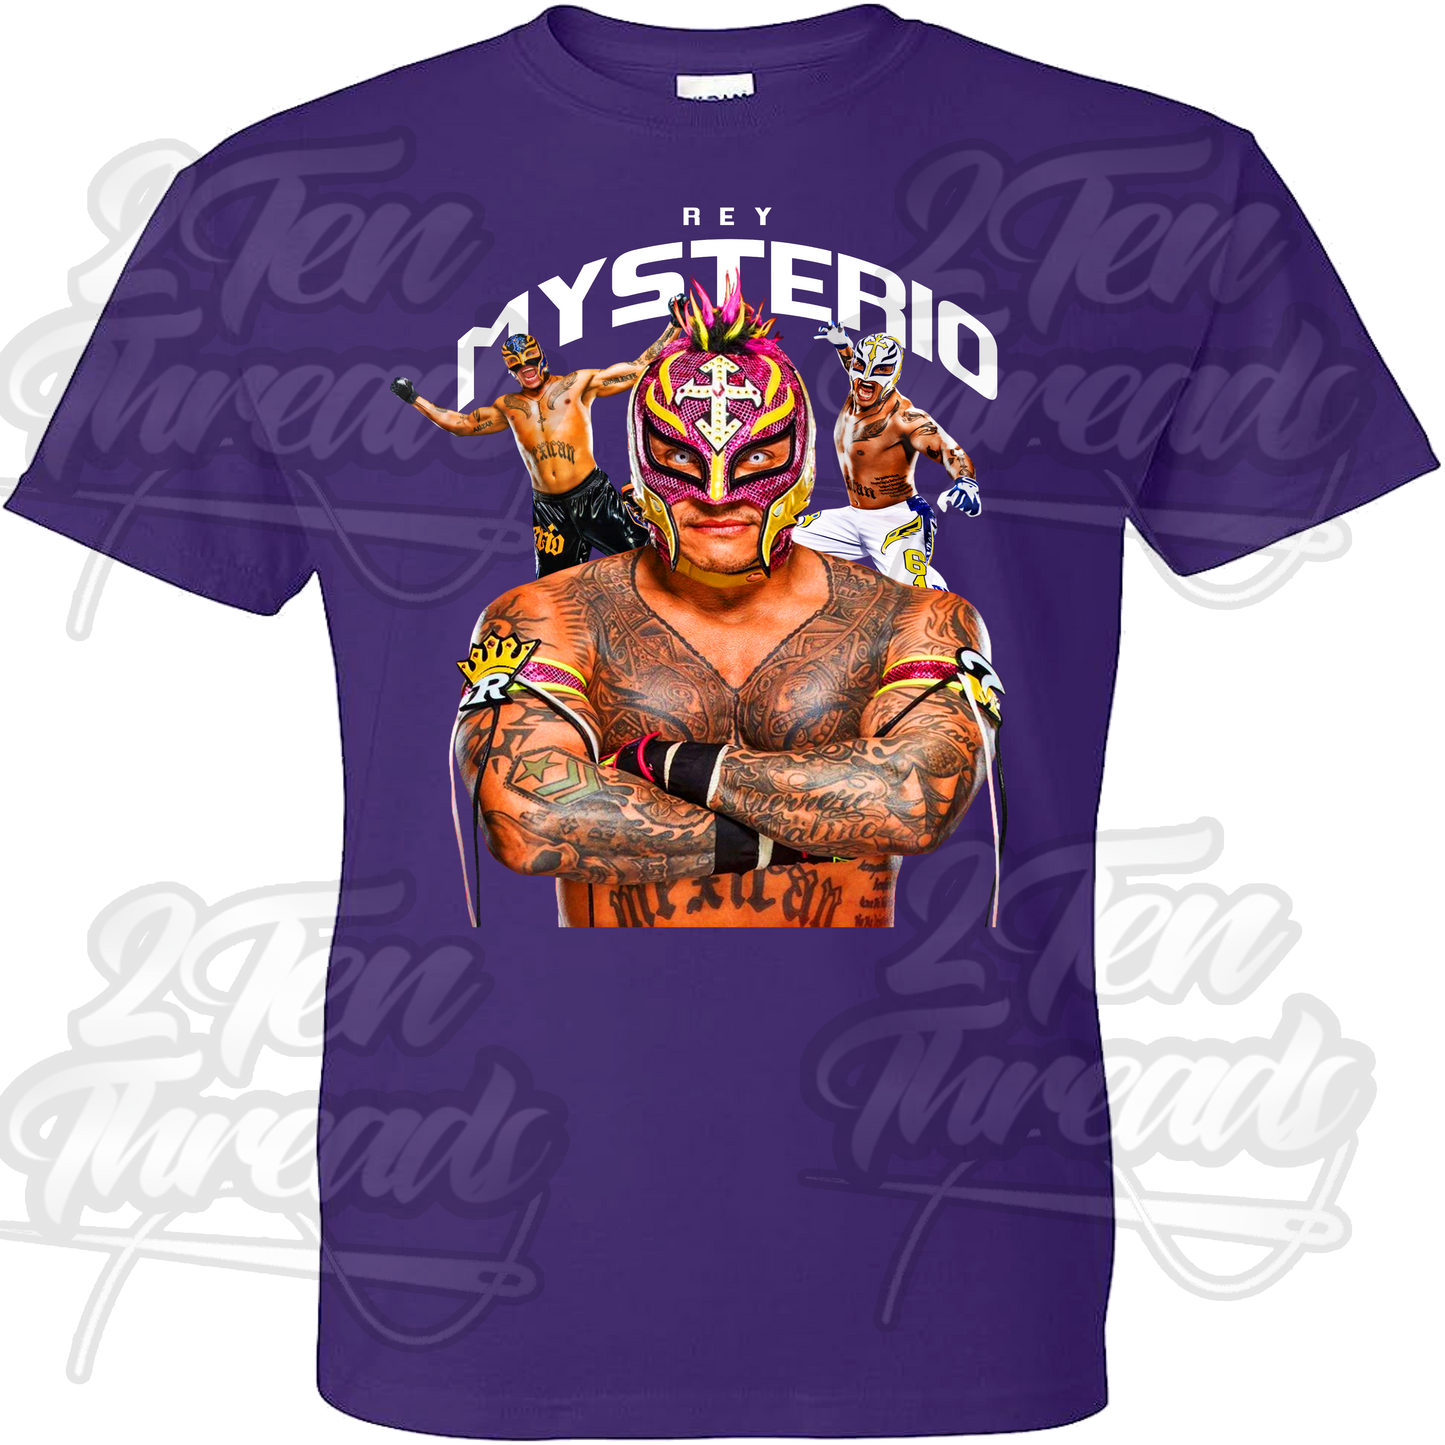 Rey Mysterio Shirt